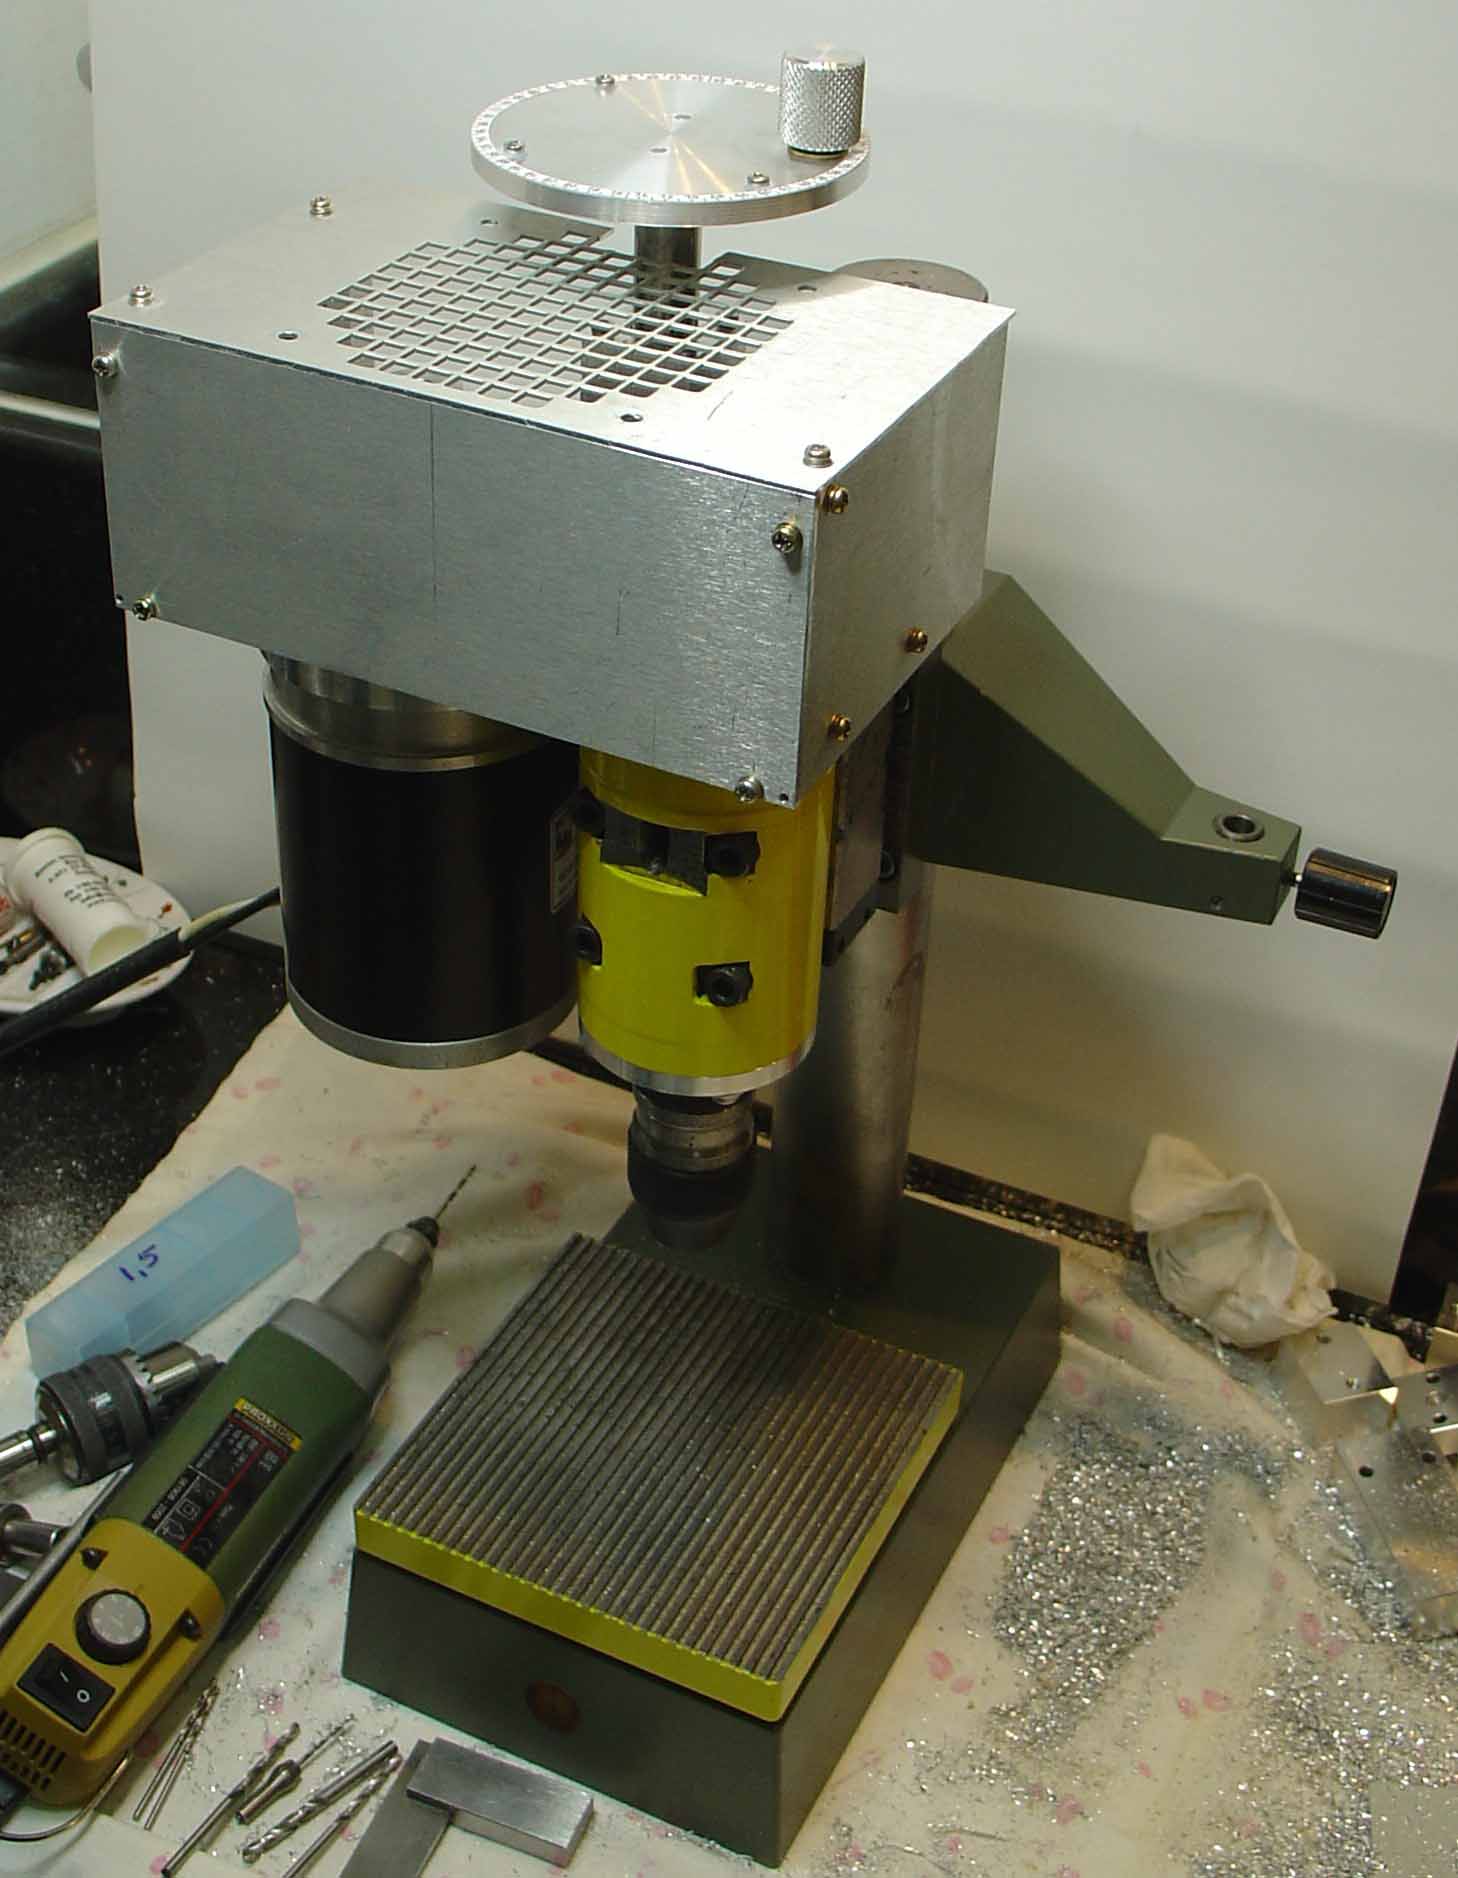 Proxxon drill press for making holes? | Page 2 | diyAudio